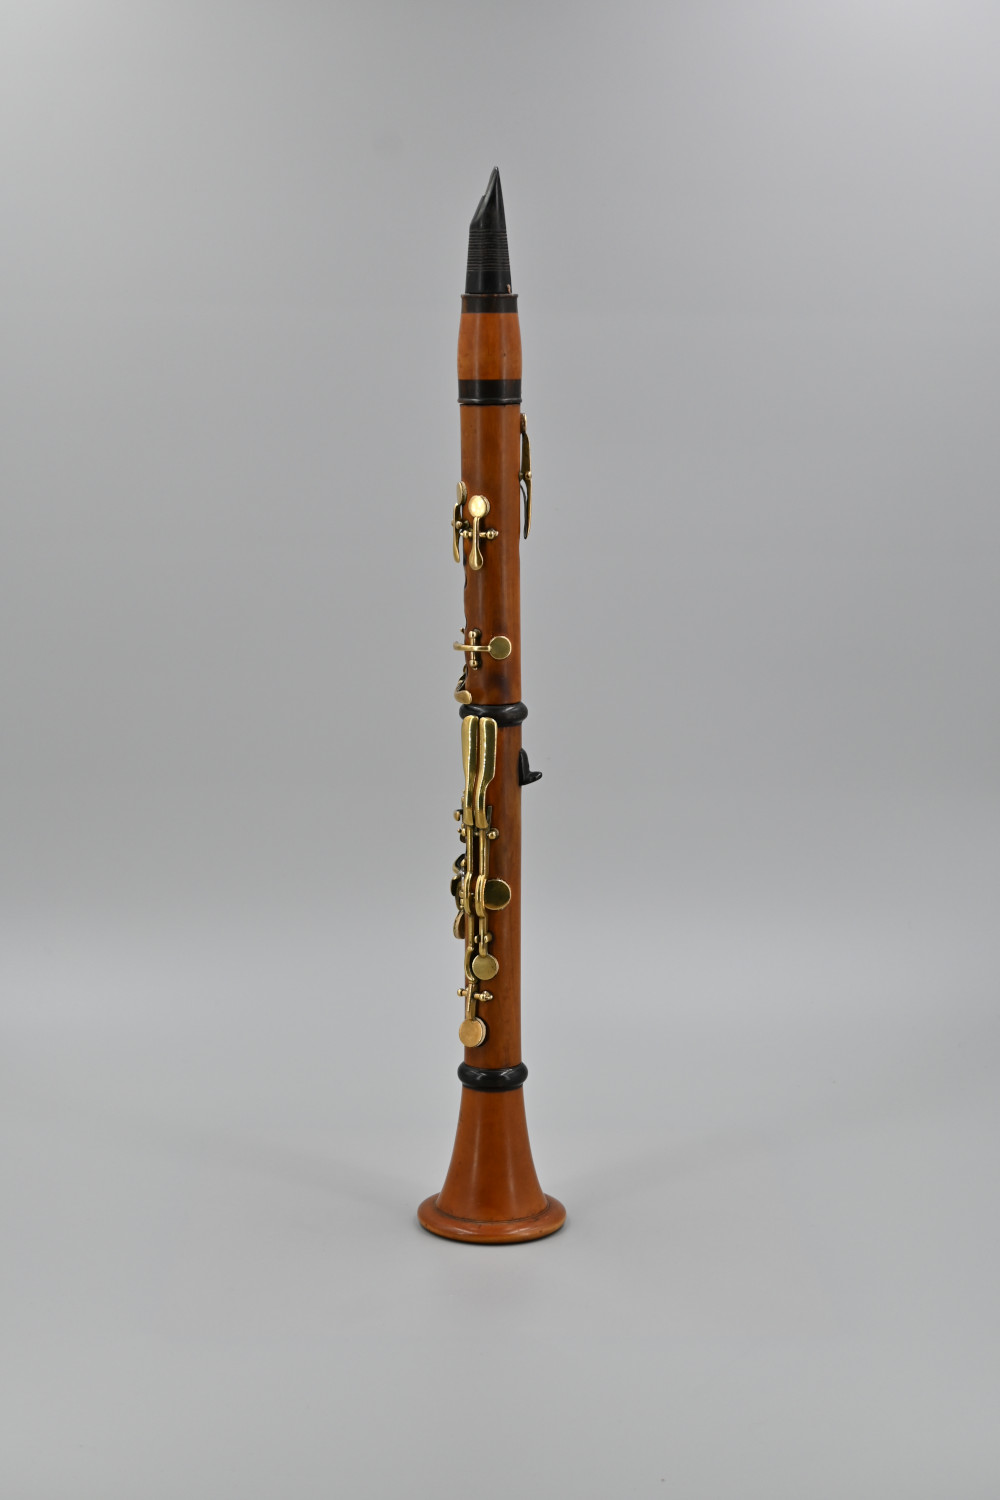 Adler-D-clarinet-VM-collectables3